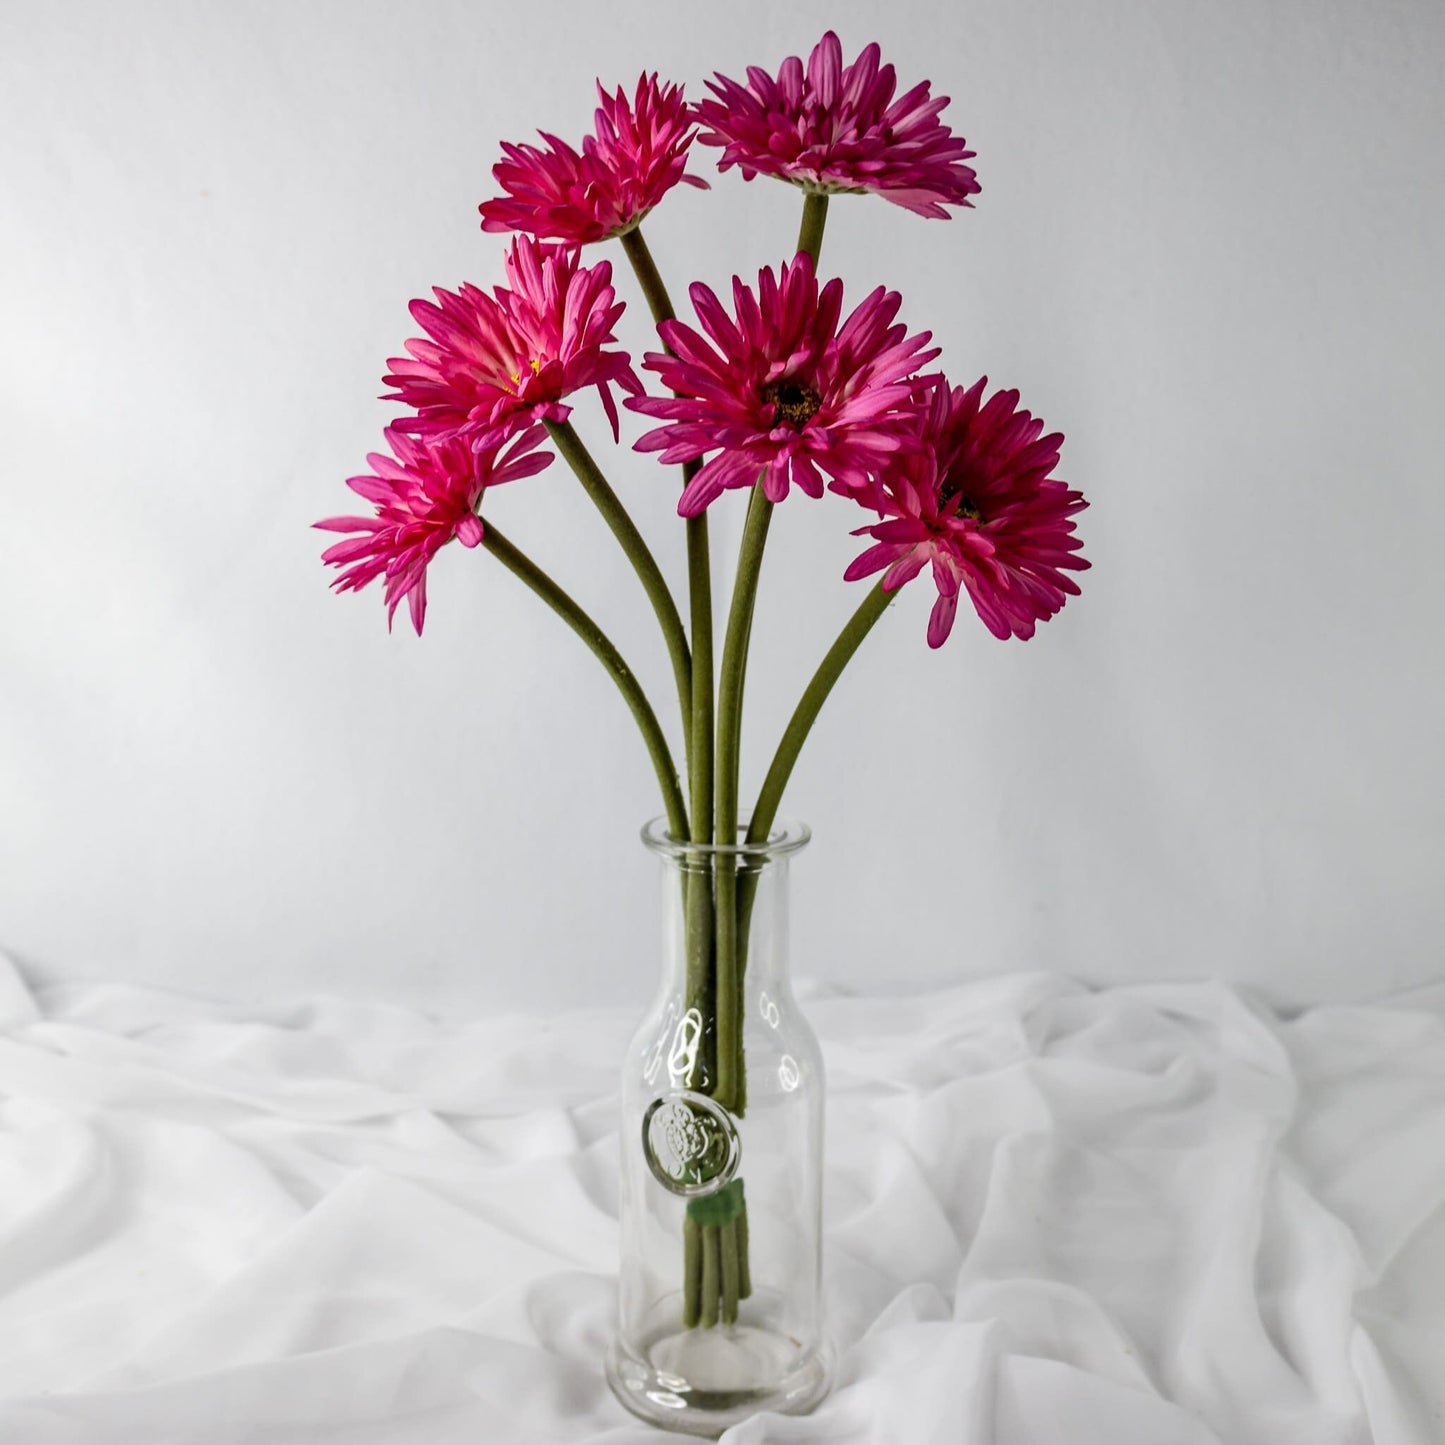 Artificial Pink Gerbera flowers in clear glass vase